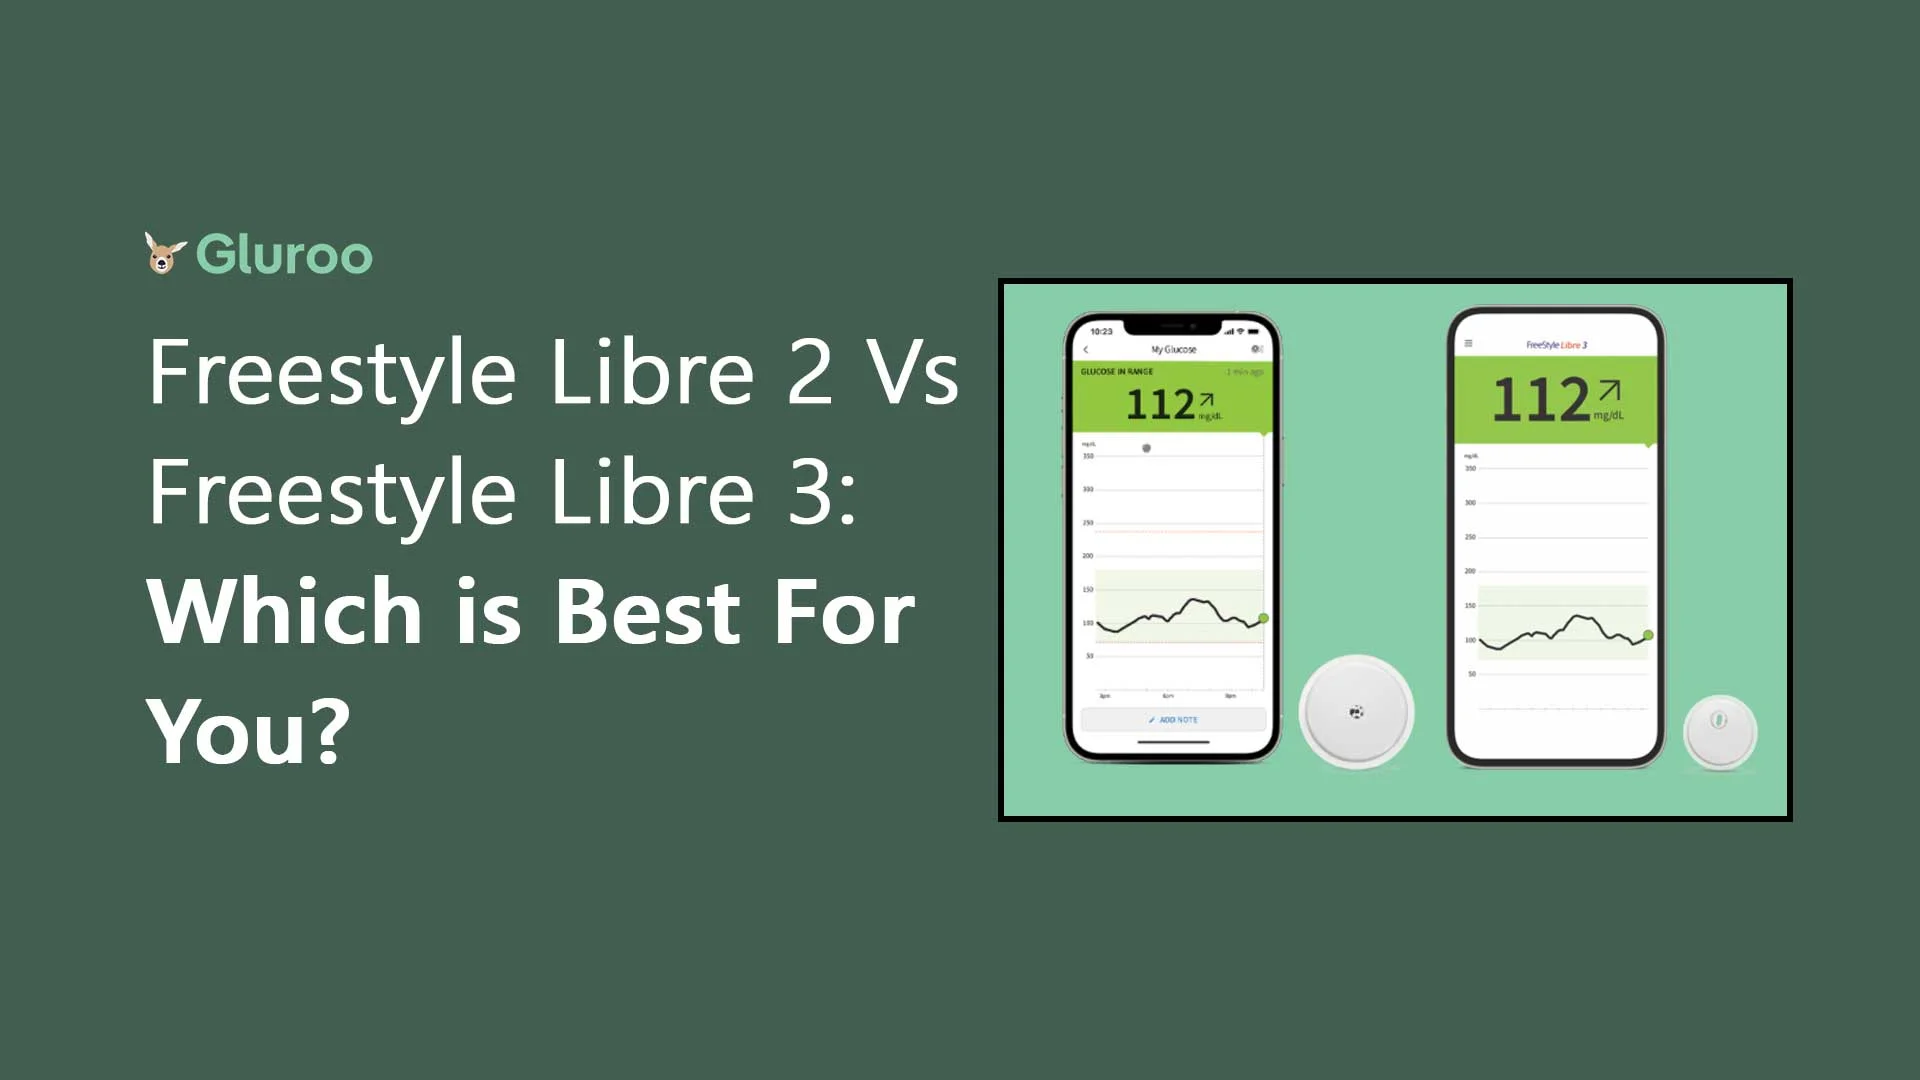 FreeStyle Libre 2 Plus Sensor